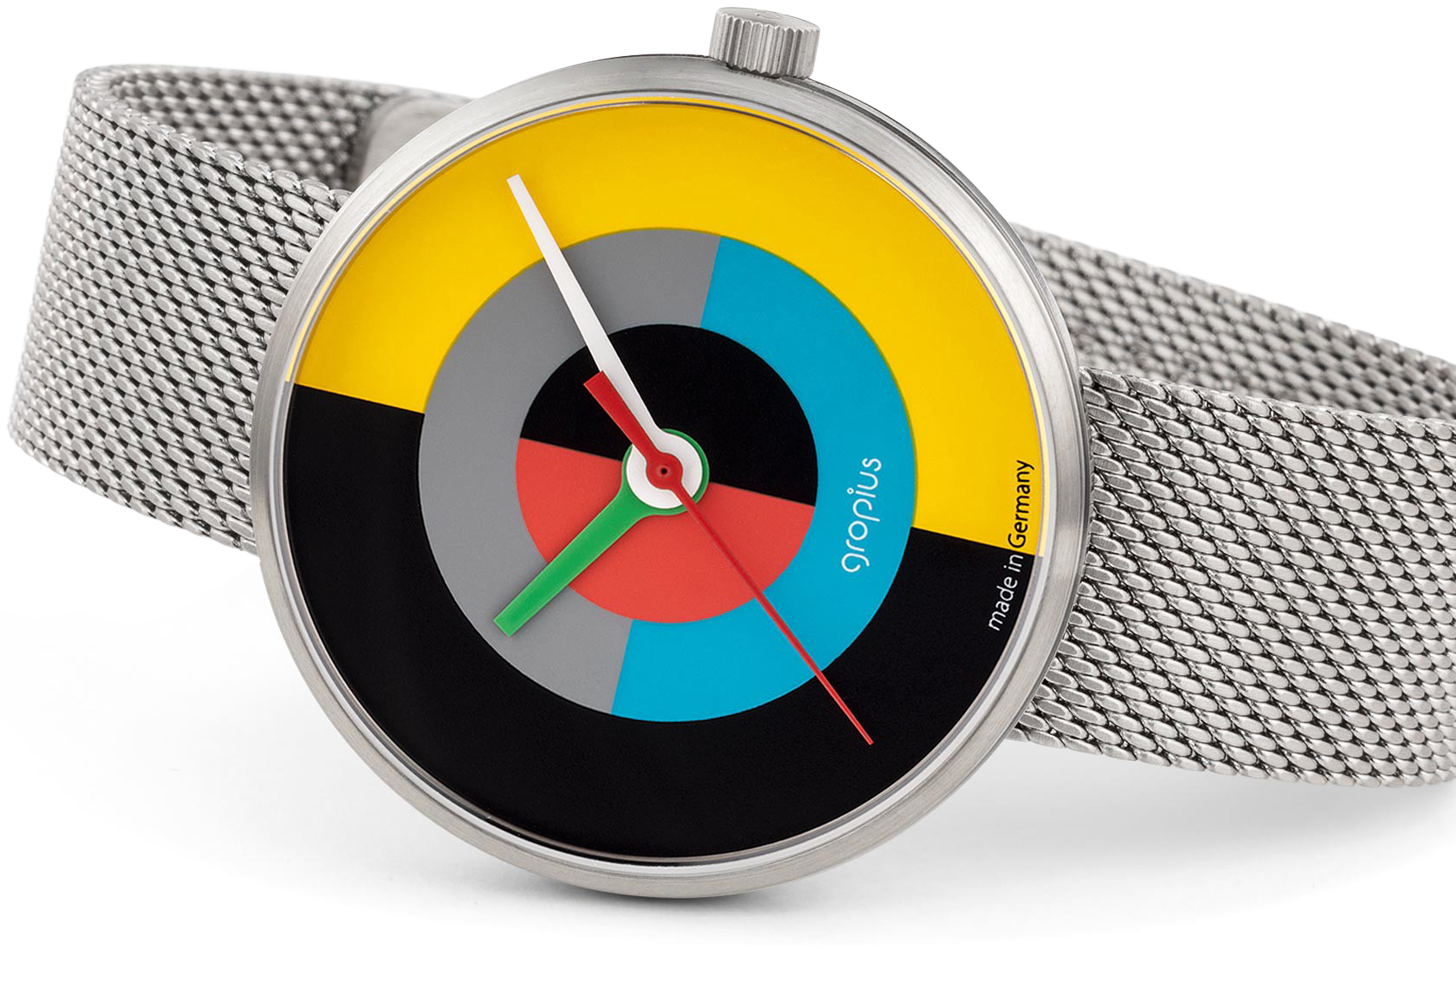 Bauhaus Watches Movement Bauhaus Collection. be Timeless. to Made